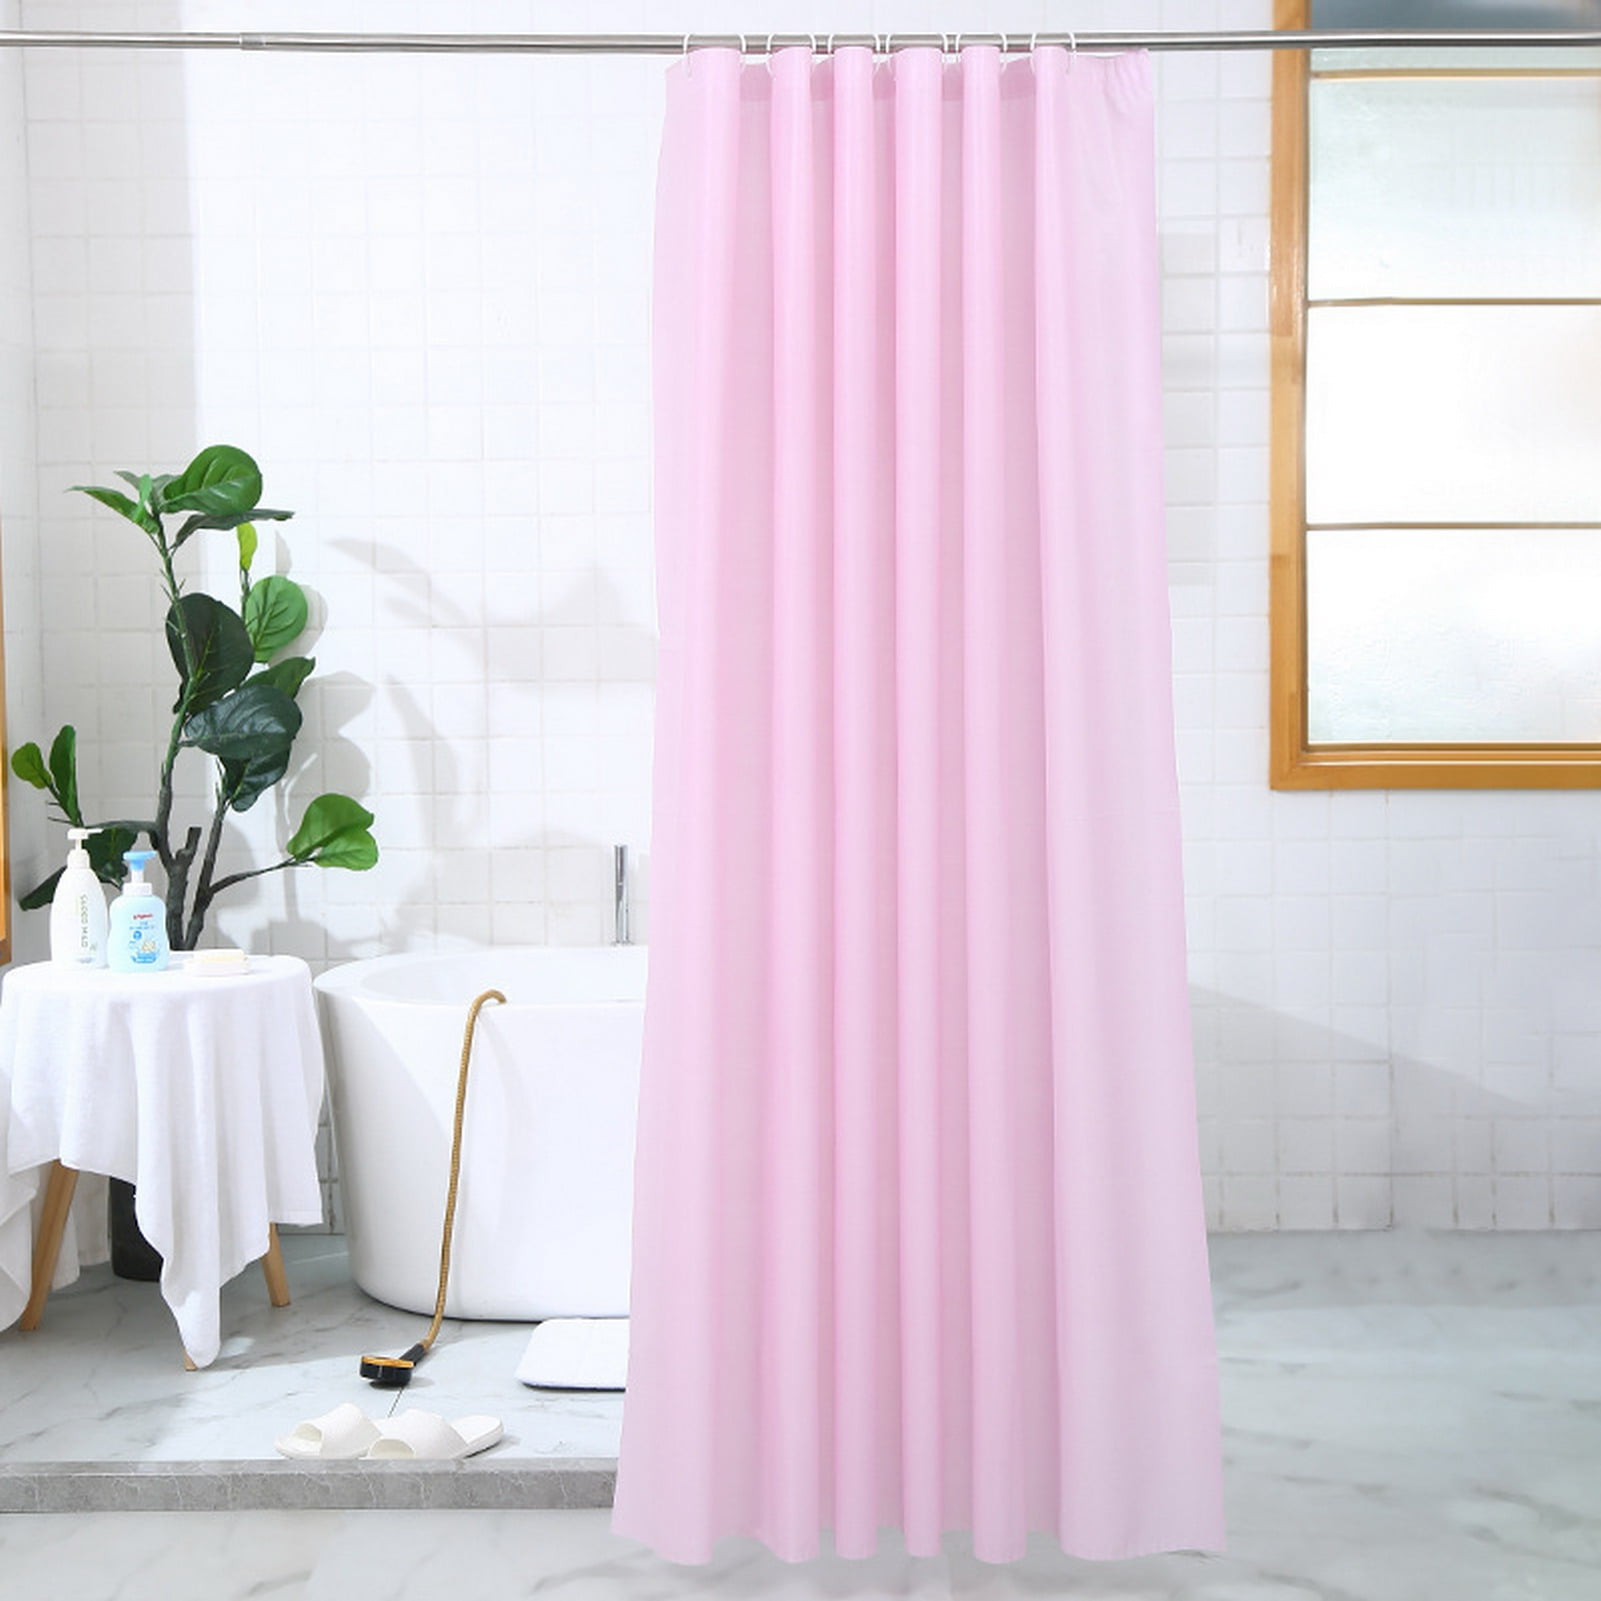 Washranp Solid Color Shower Curtain,Tear-resistant No Fading Snap